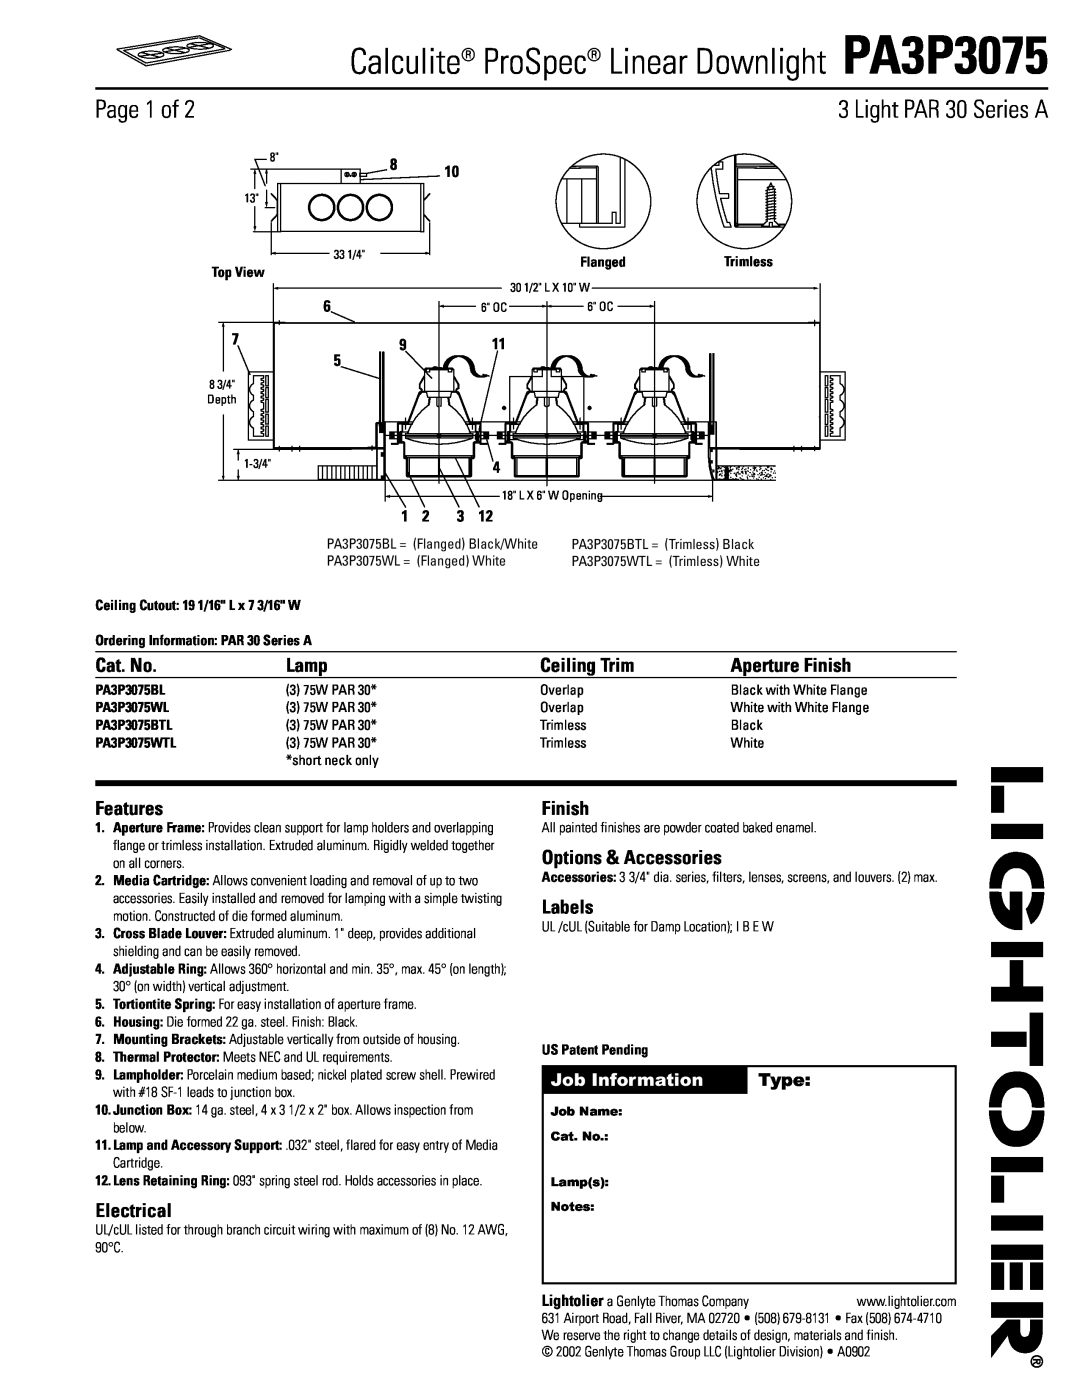 Lightolier PA3P3075 manual Page 1 of, Light PAR 30 Series A, Cat. No, Lamp, Ceiling Trim, Aperture Finish, Features, Type 